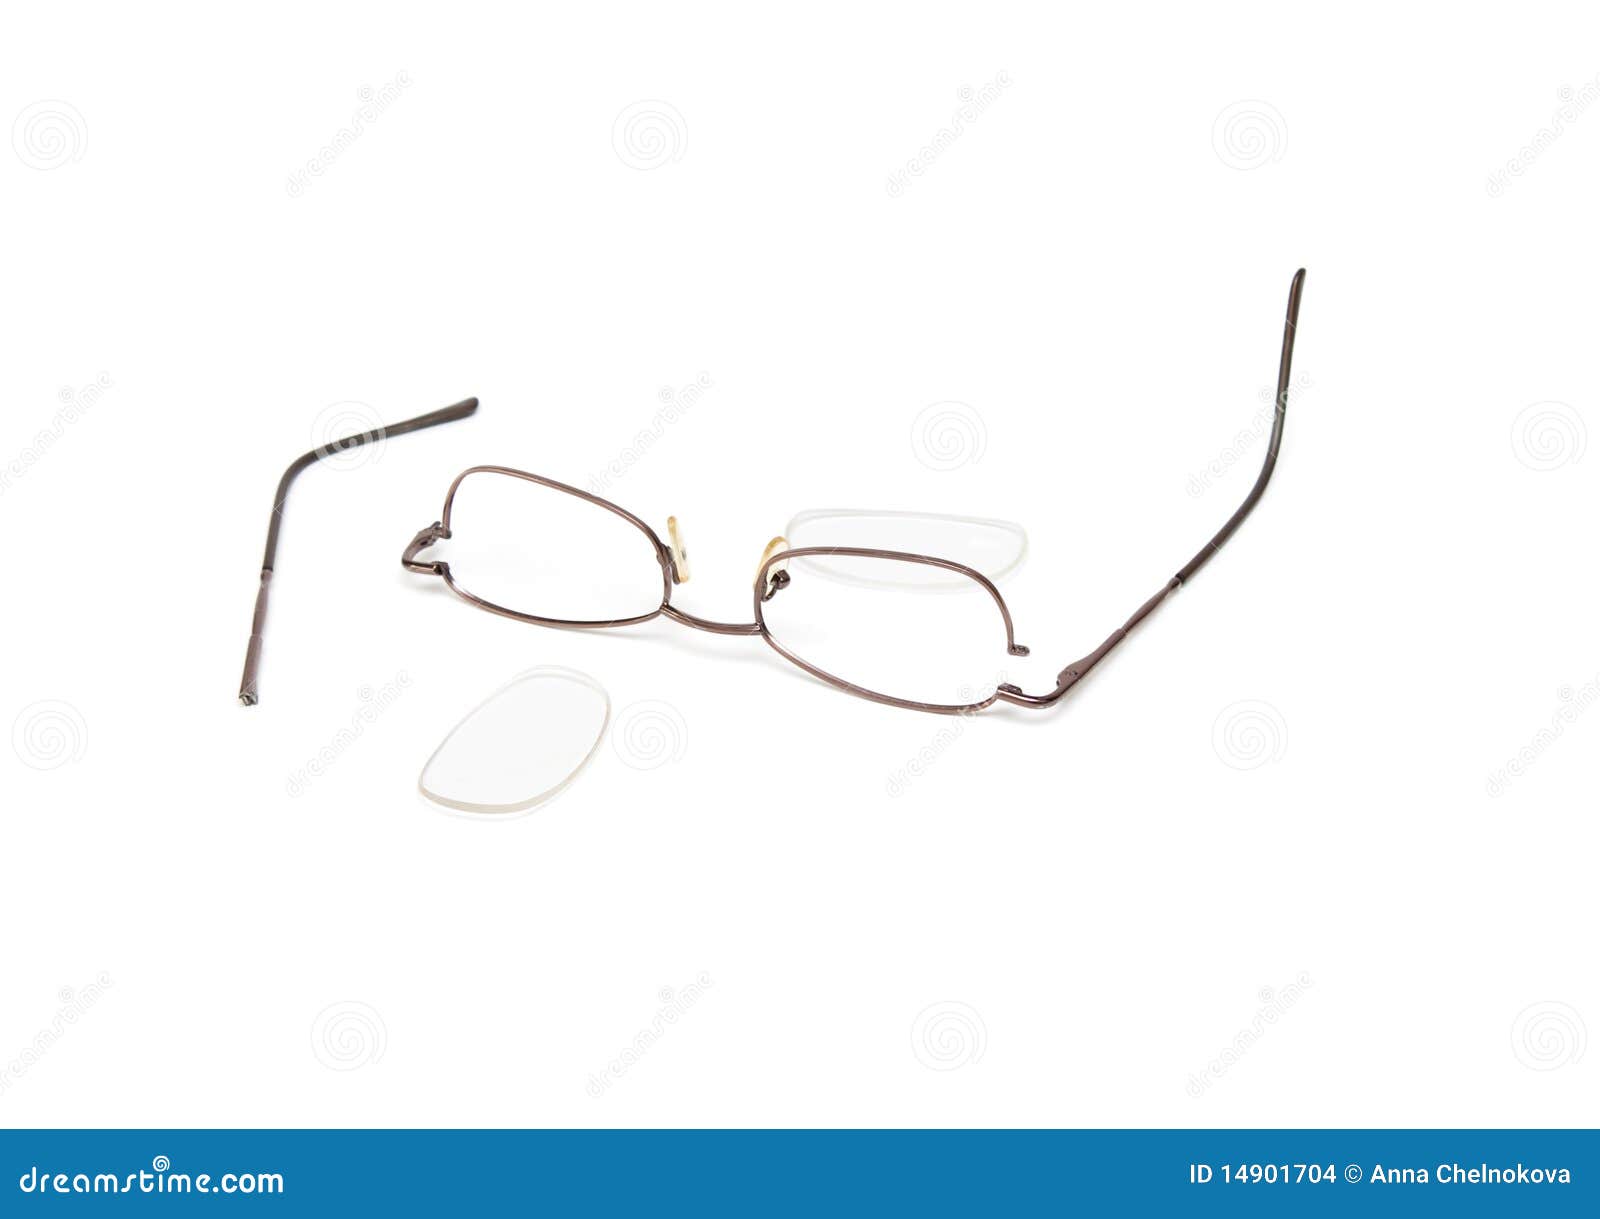 broken eyeglasses clipart - photo #19